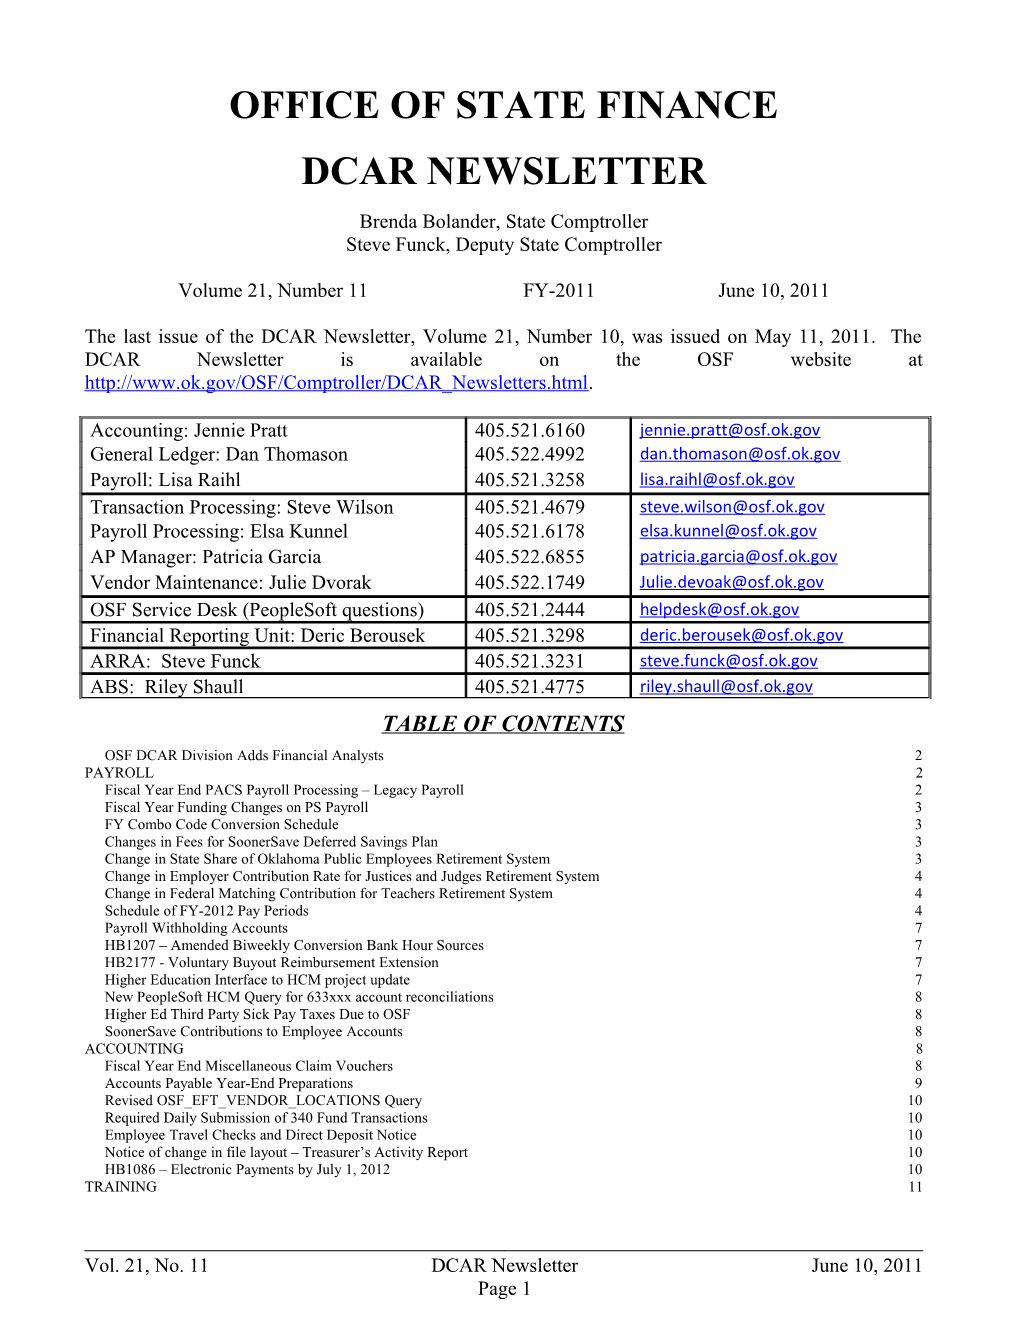 Office of State Finance DCAR Newsletter, June 10, 2011